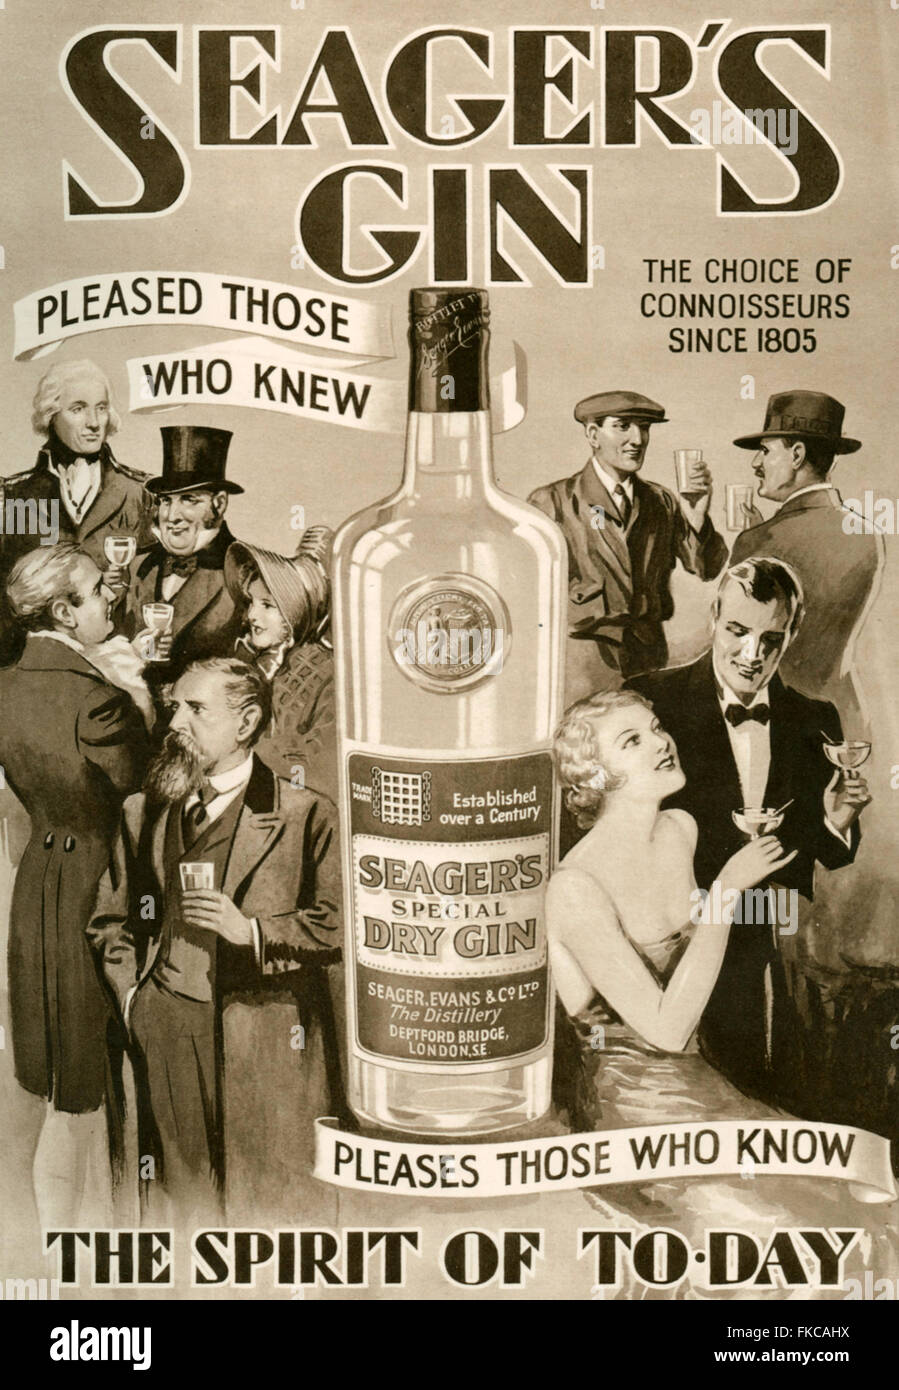 1930 UK Seagers Magazine anuncio Foto de stock